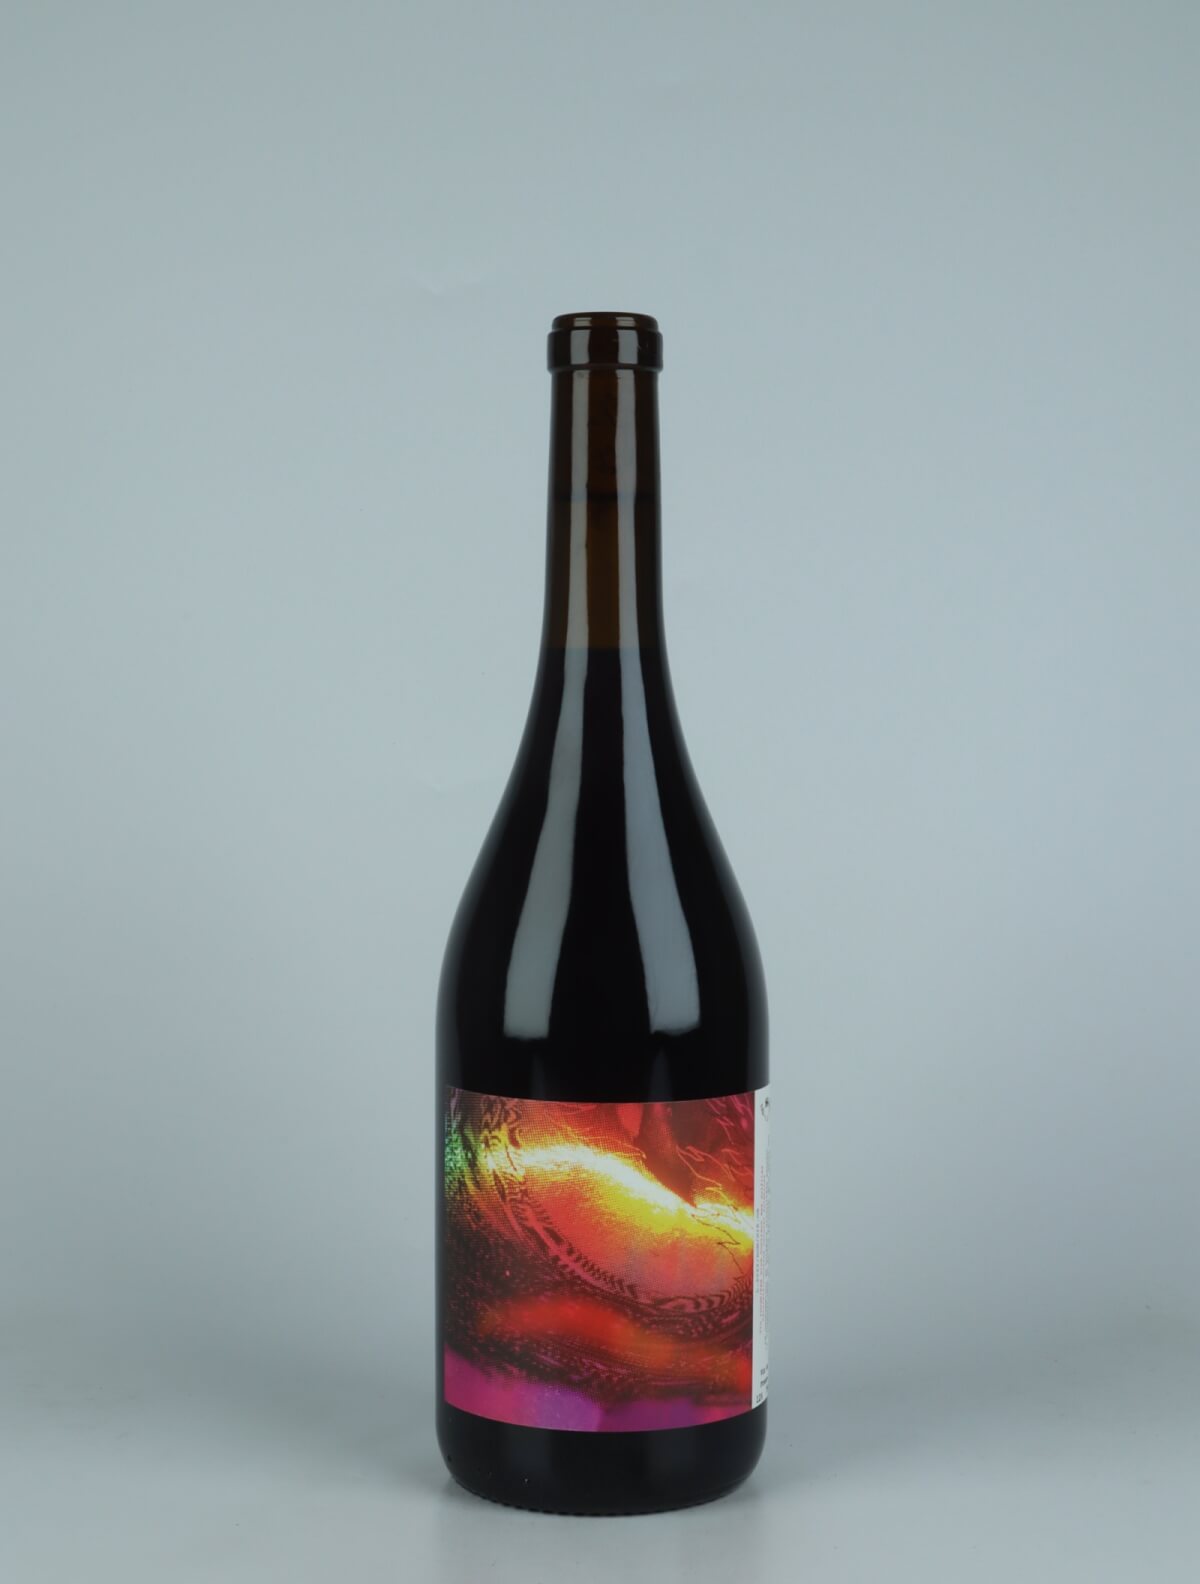 A bottle 2022 Brise de Mer Red wine from Ad Vinum, Gard in France